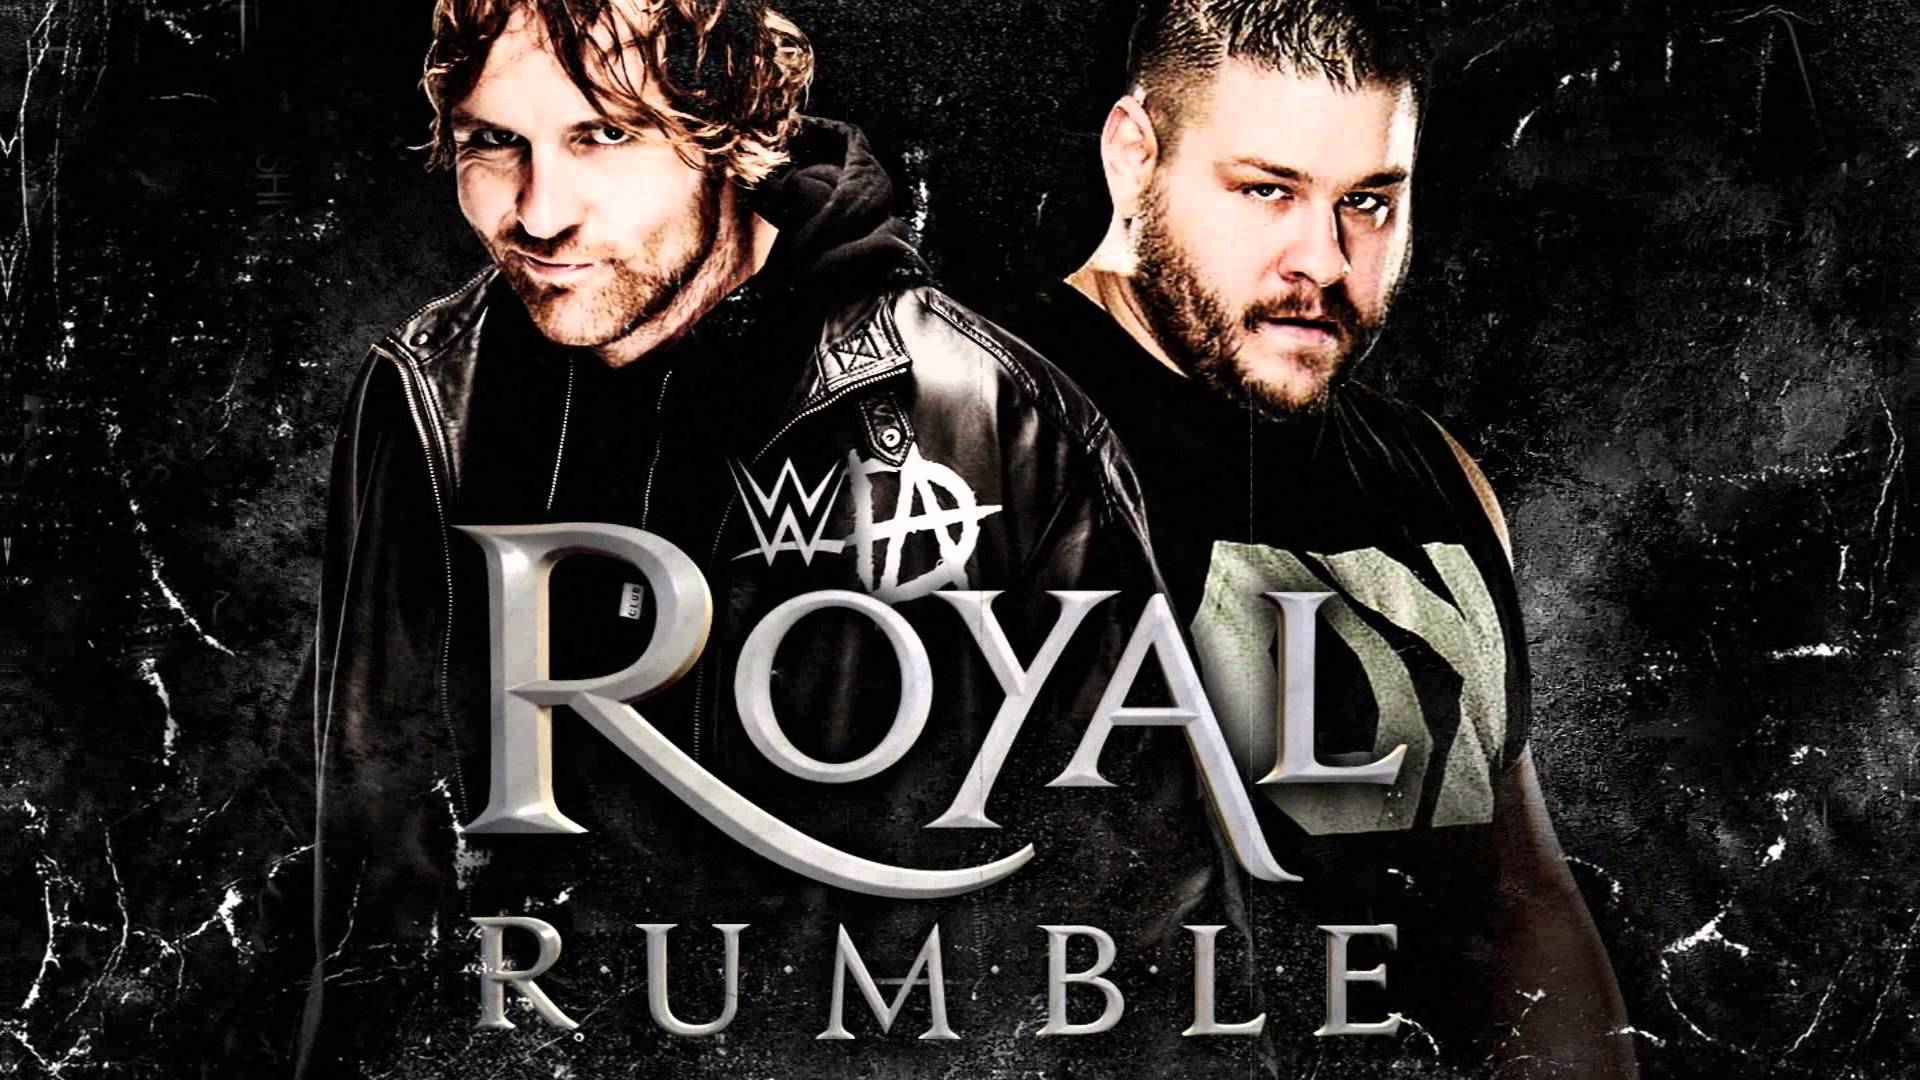 Royal Rumble WWE 2016 wallpaper HD 2016 in WWE